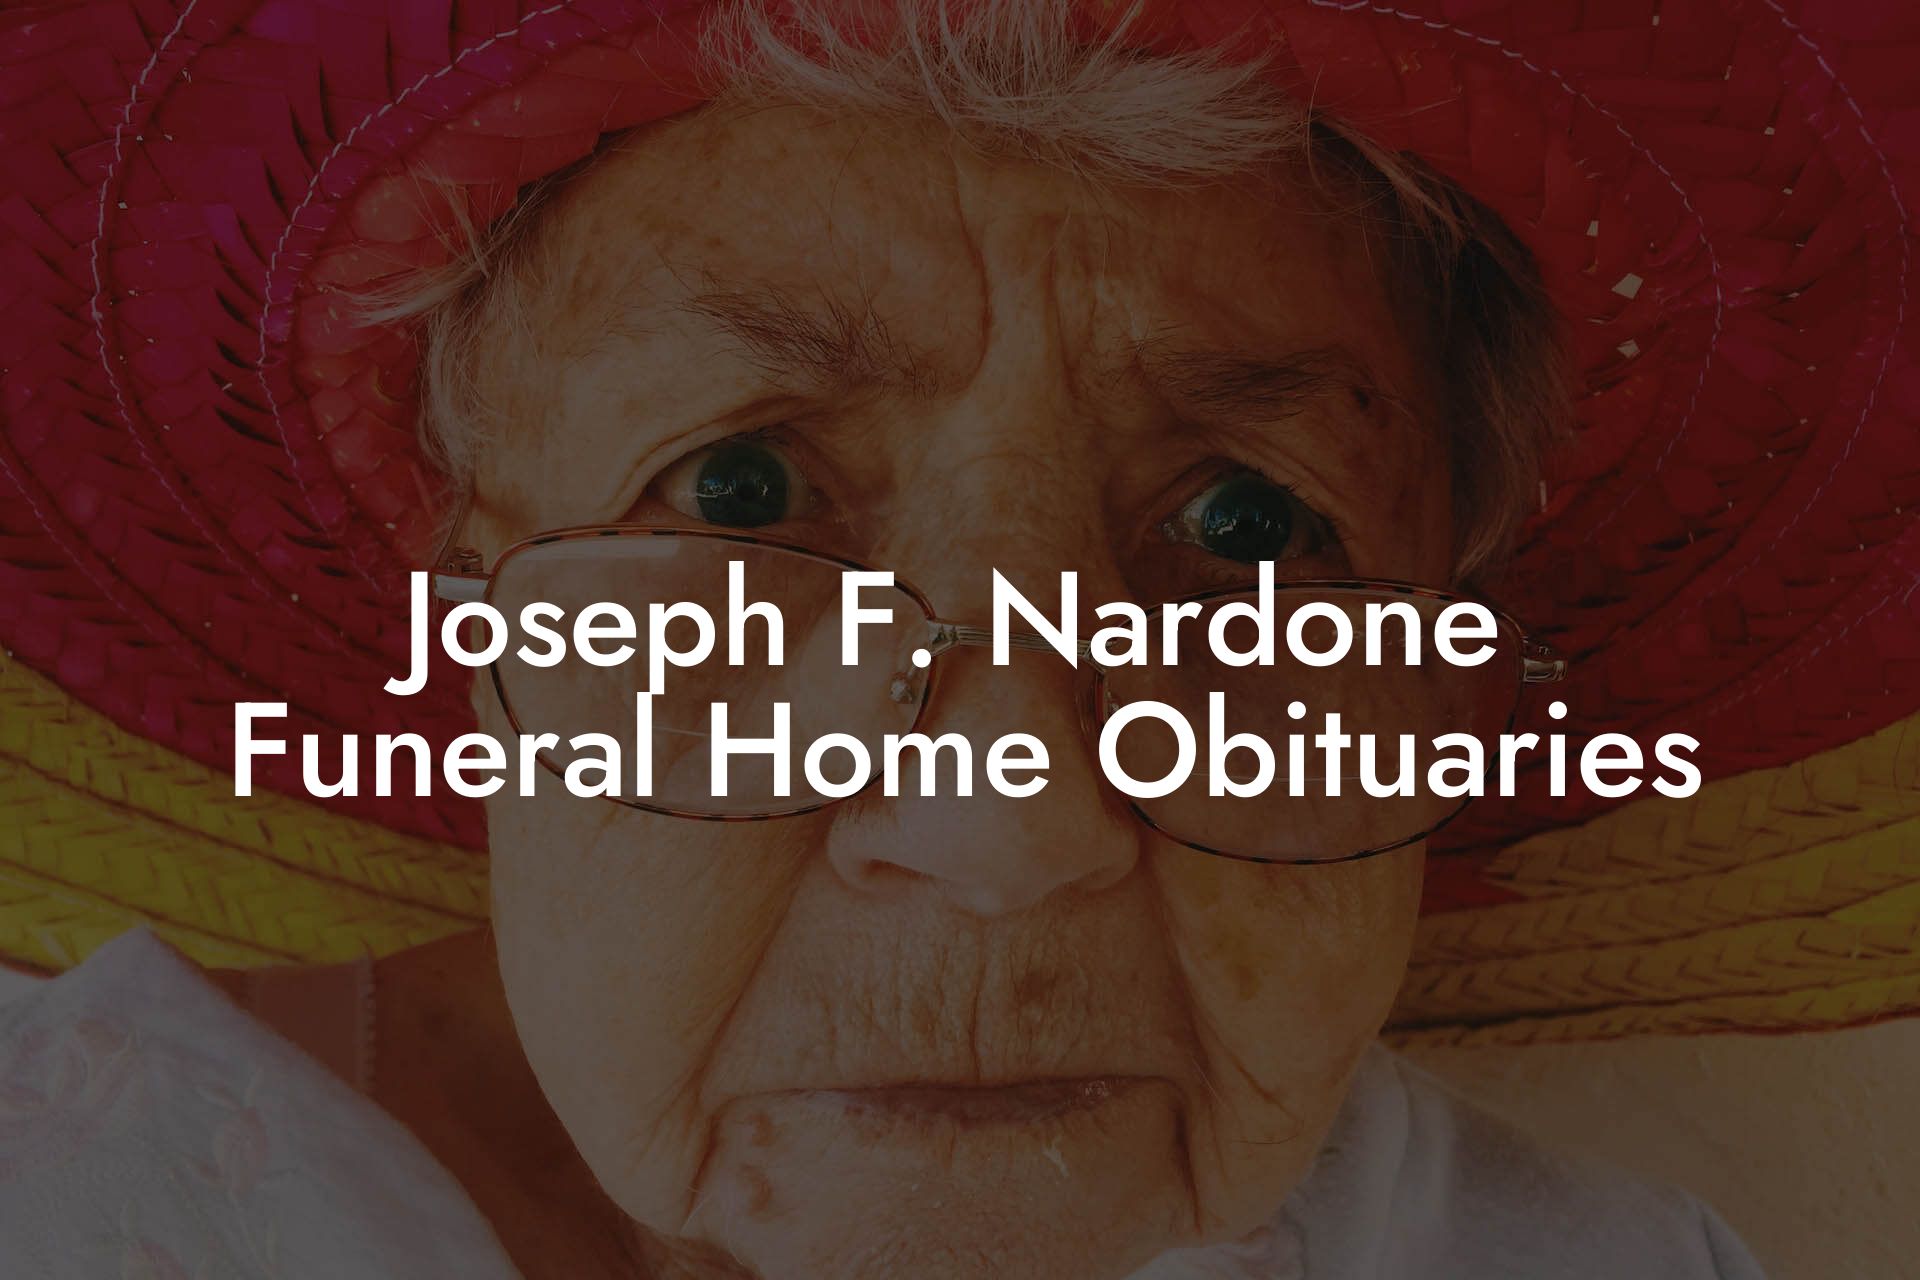 Joseph F. Nardone Funeral Home Obituaries